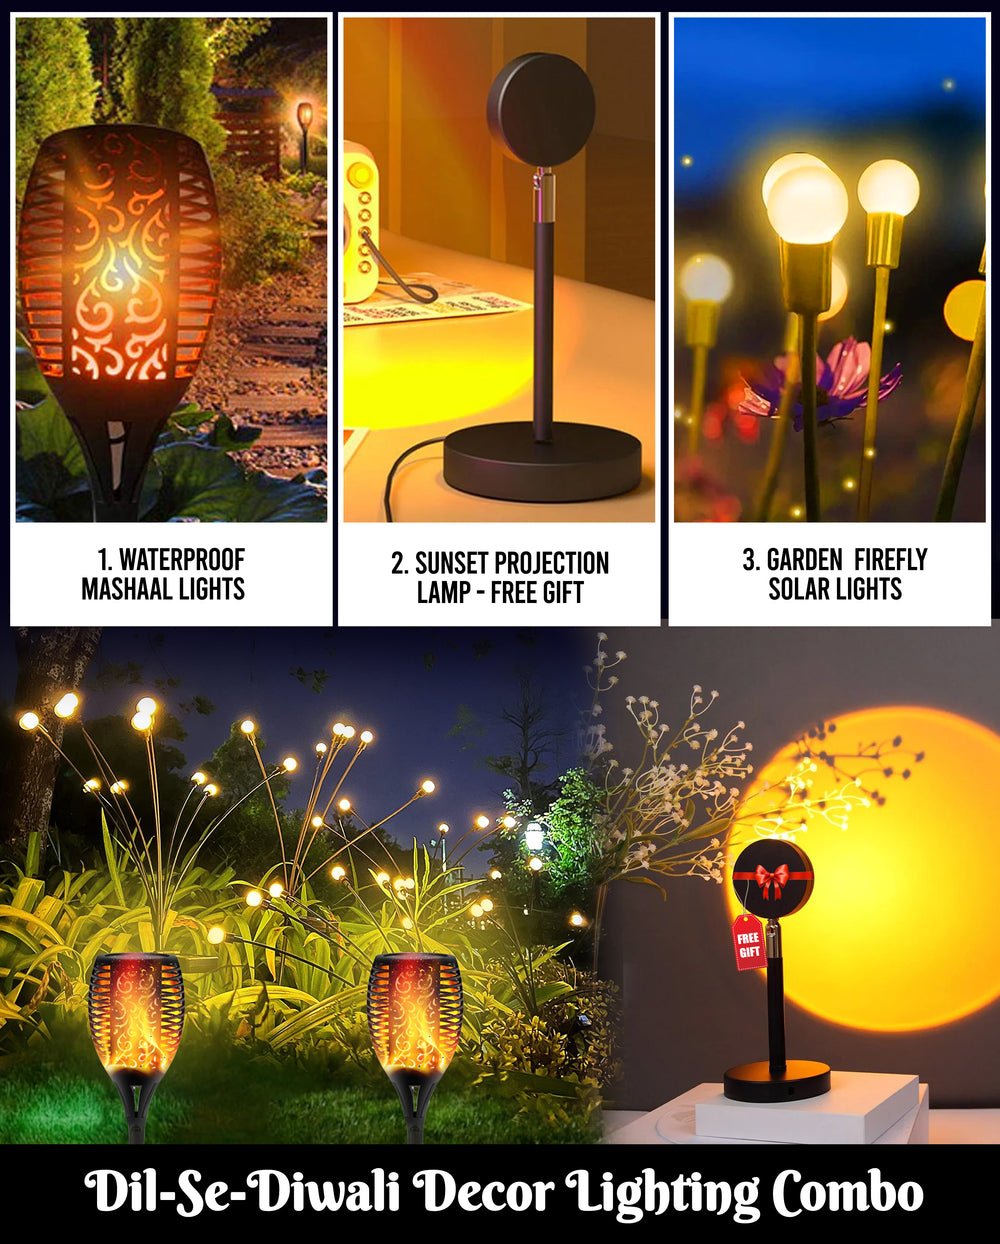 Dil-Se-Diwali Lighting Kit - Home Essentials Store